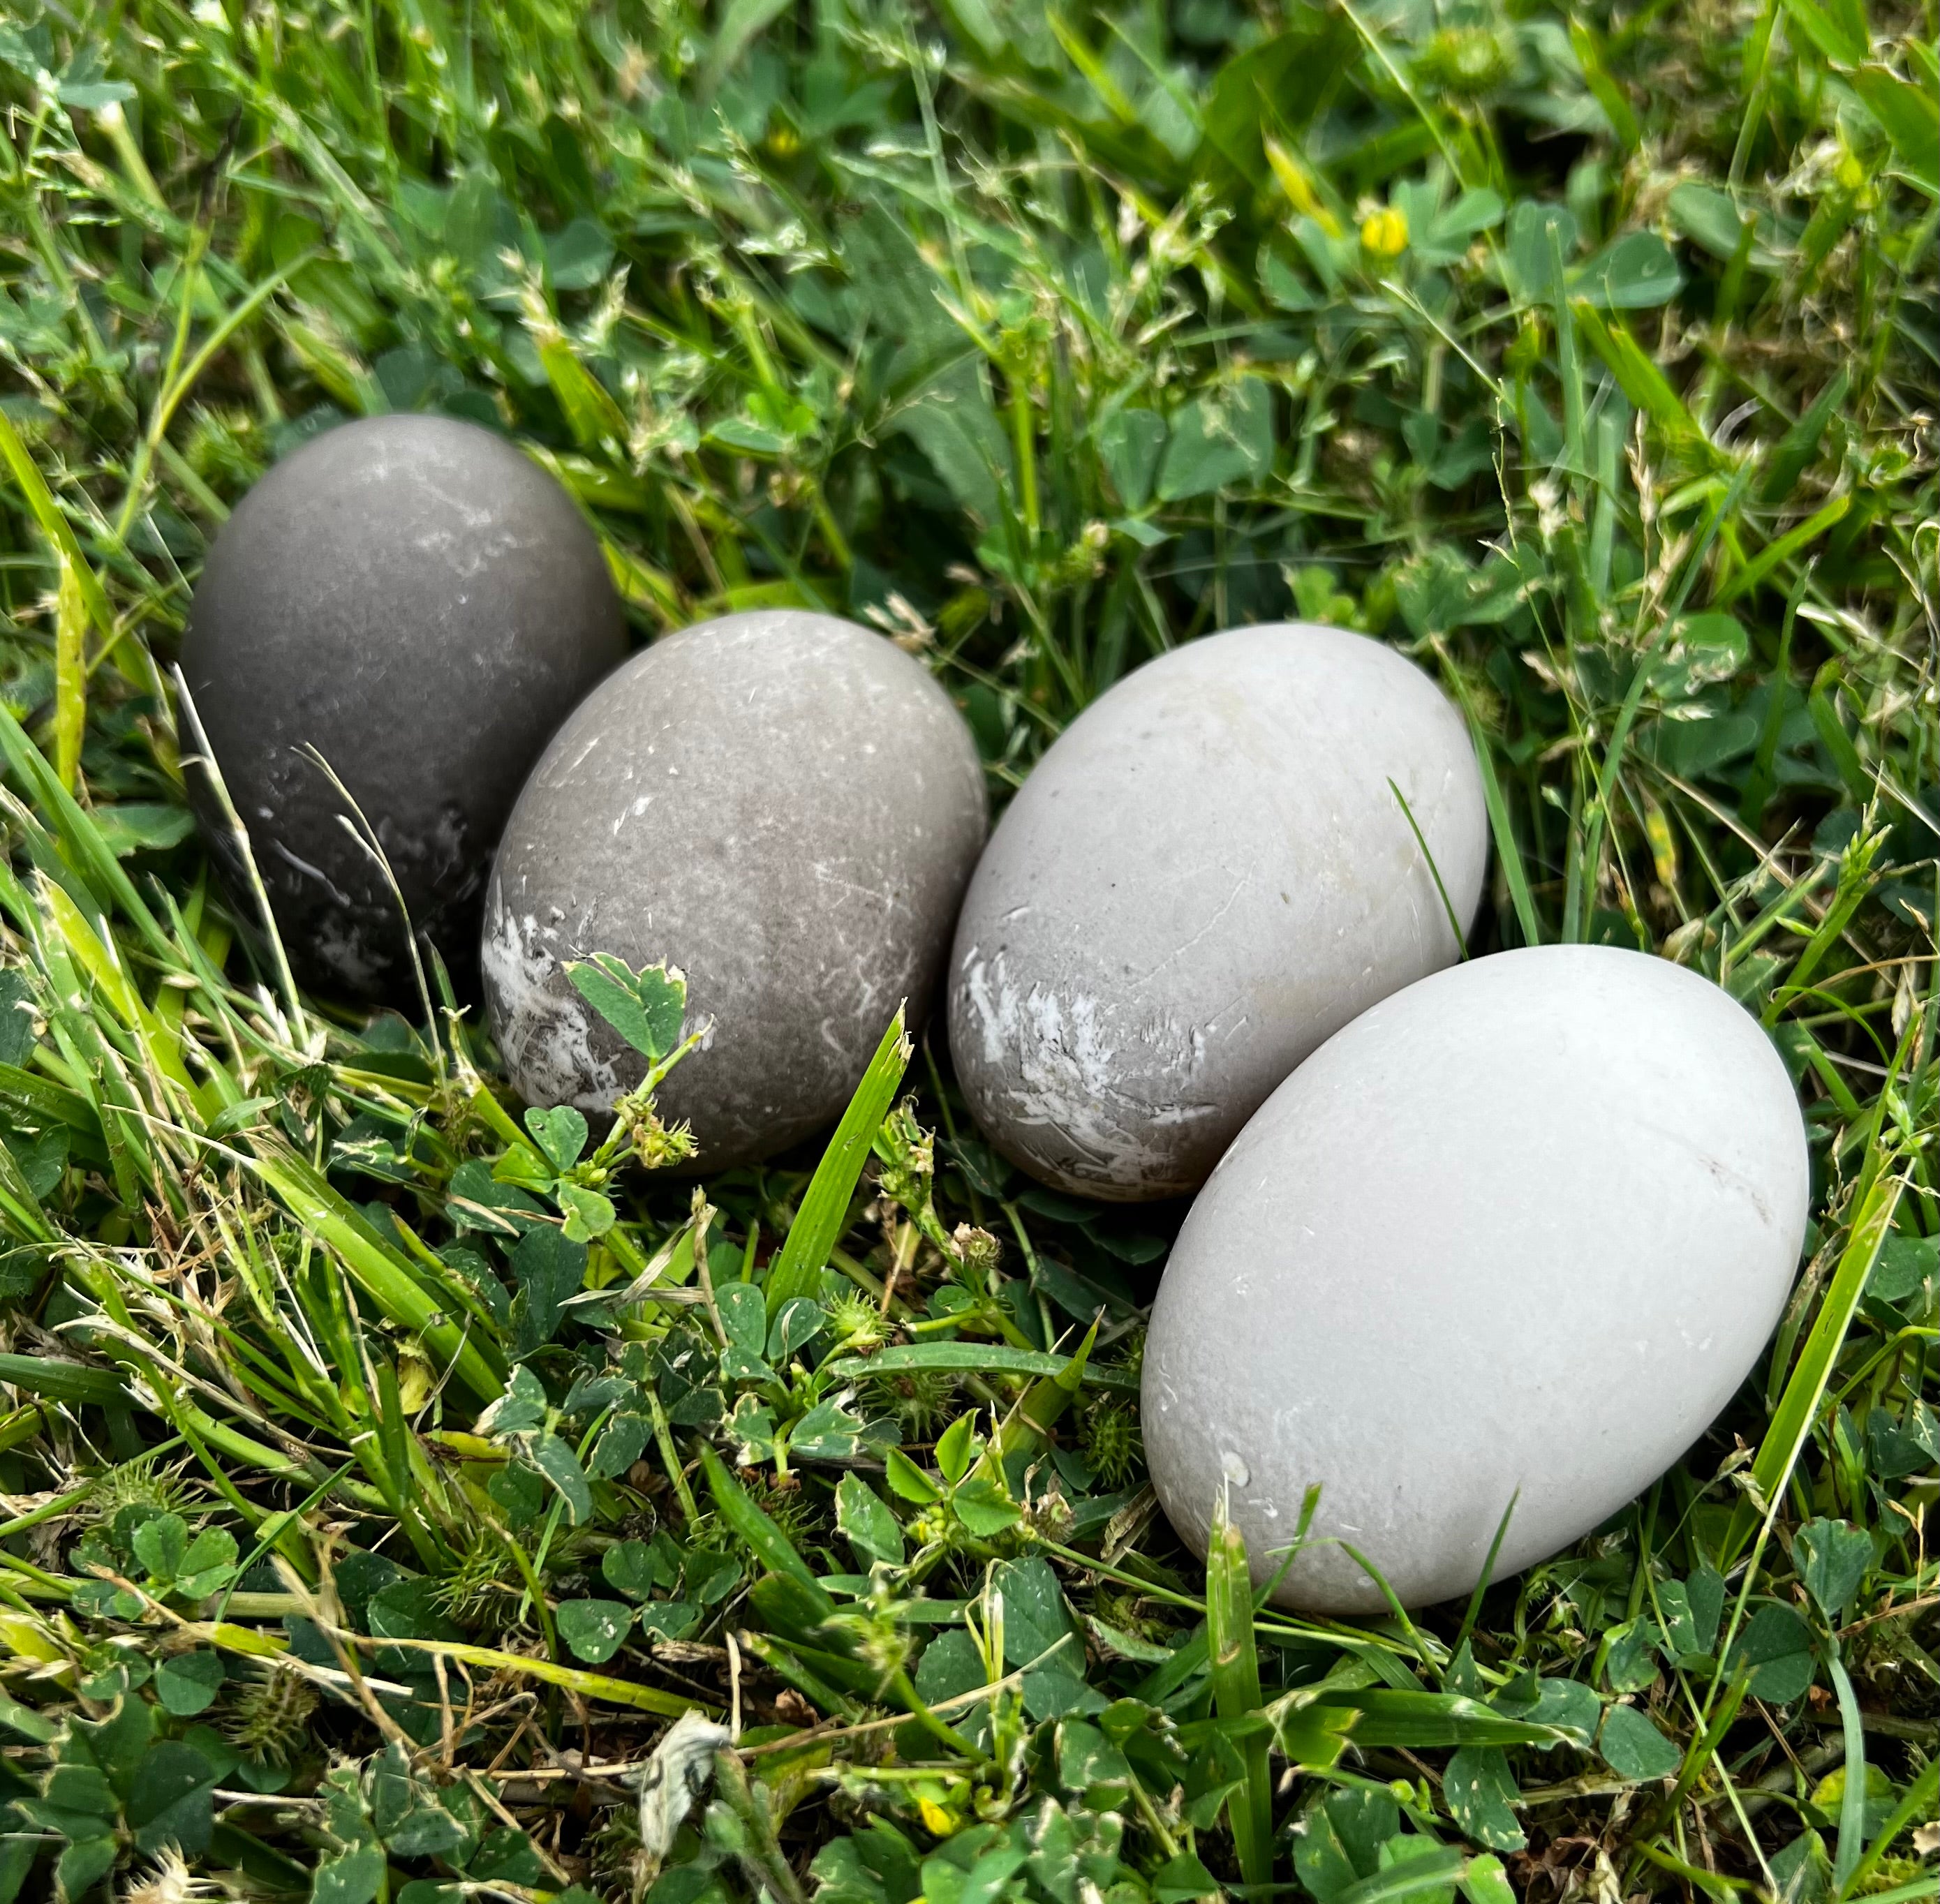 Cayuga Duck Hatching Eggs